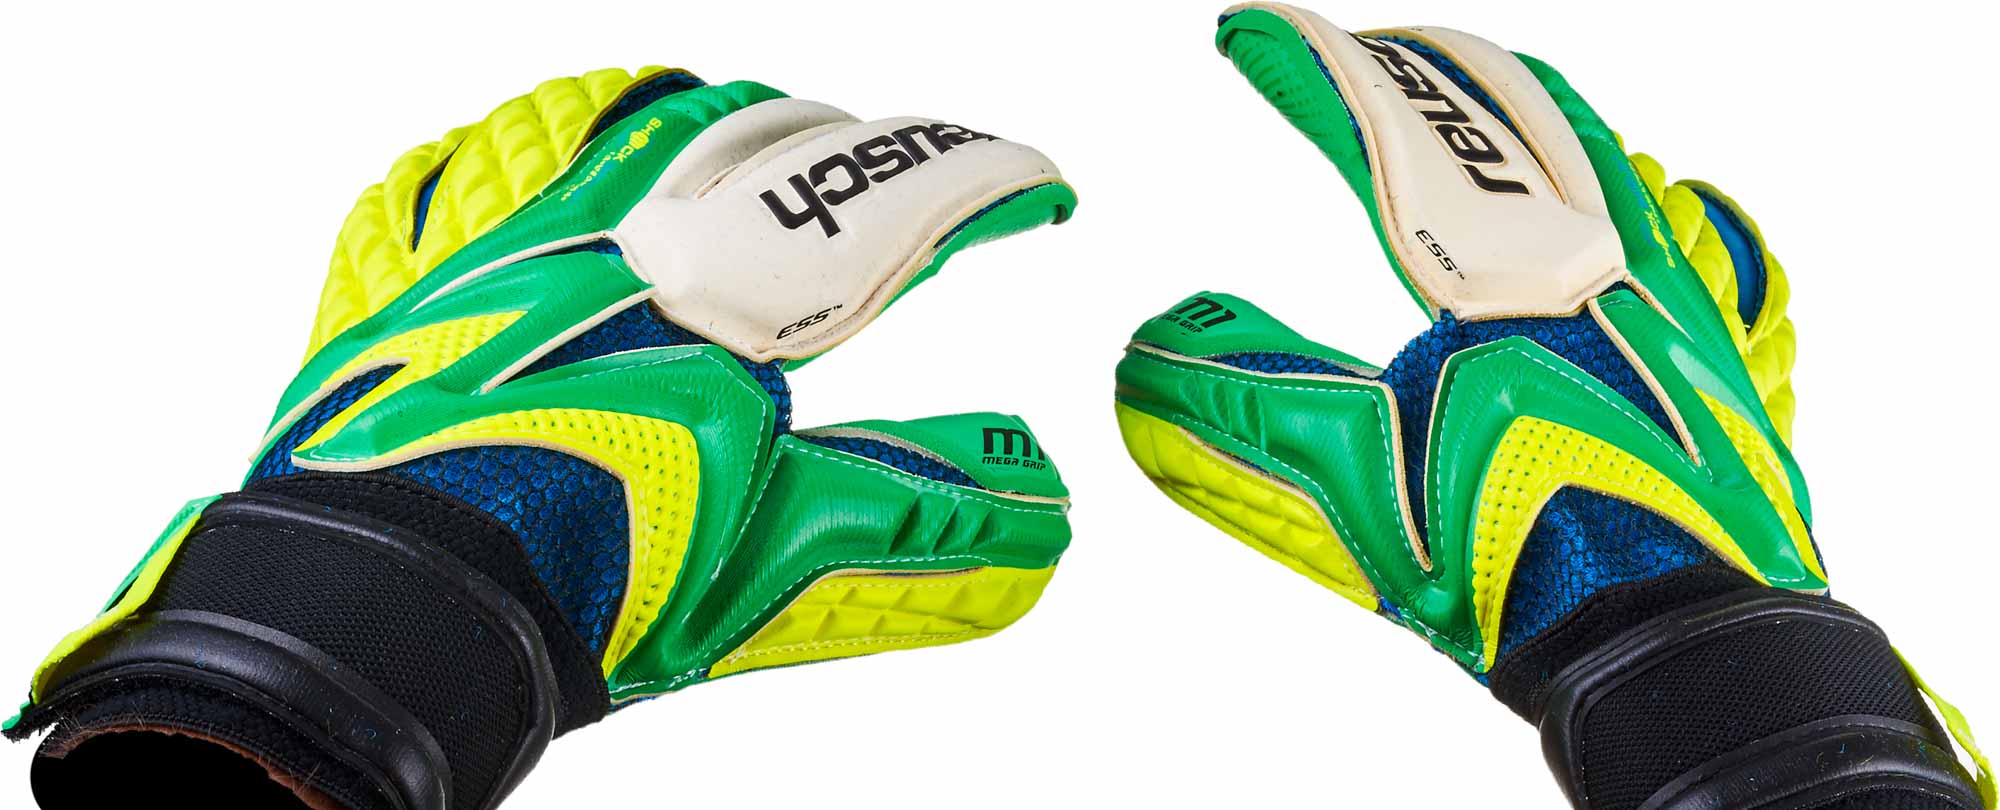 Blue Details about   Reusch Waorani Deluxe M1 Goalkeeper Soccer Gloves Size 7 White Green 